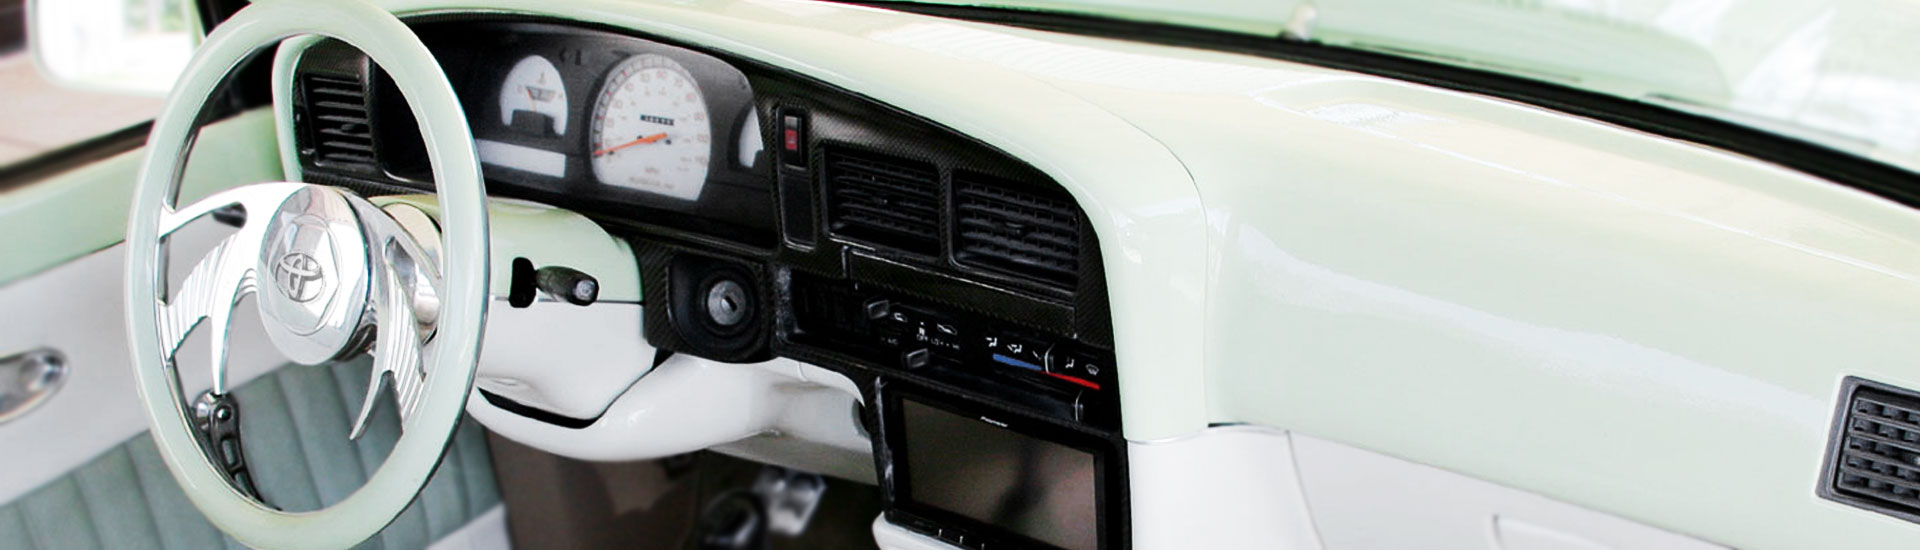 Toyota T-100 Pickup Truck Dash Kits